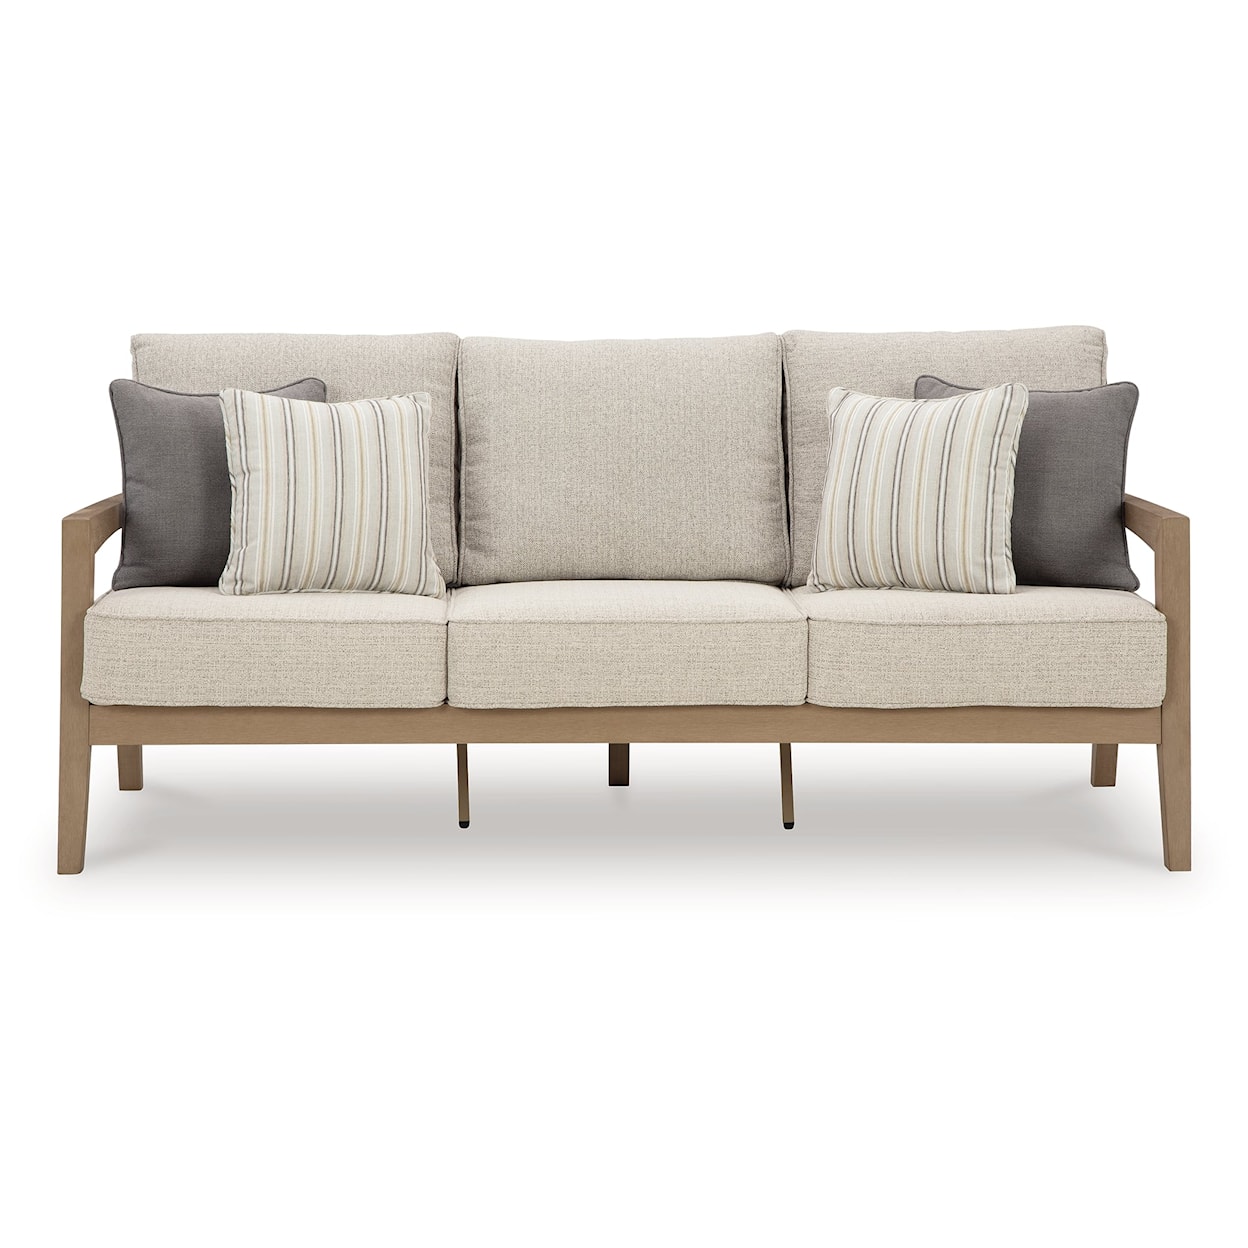 Michael Alan Select Hallow Creek Outdoor Sofa with Cushion